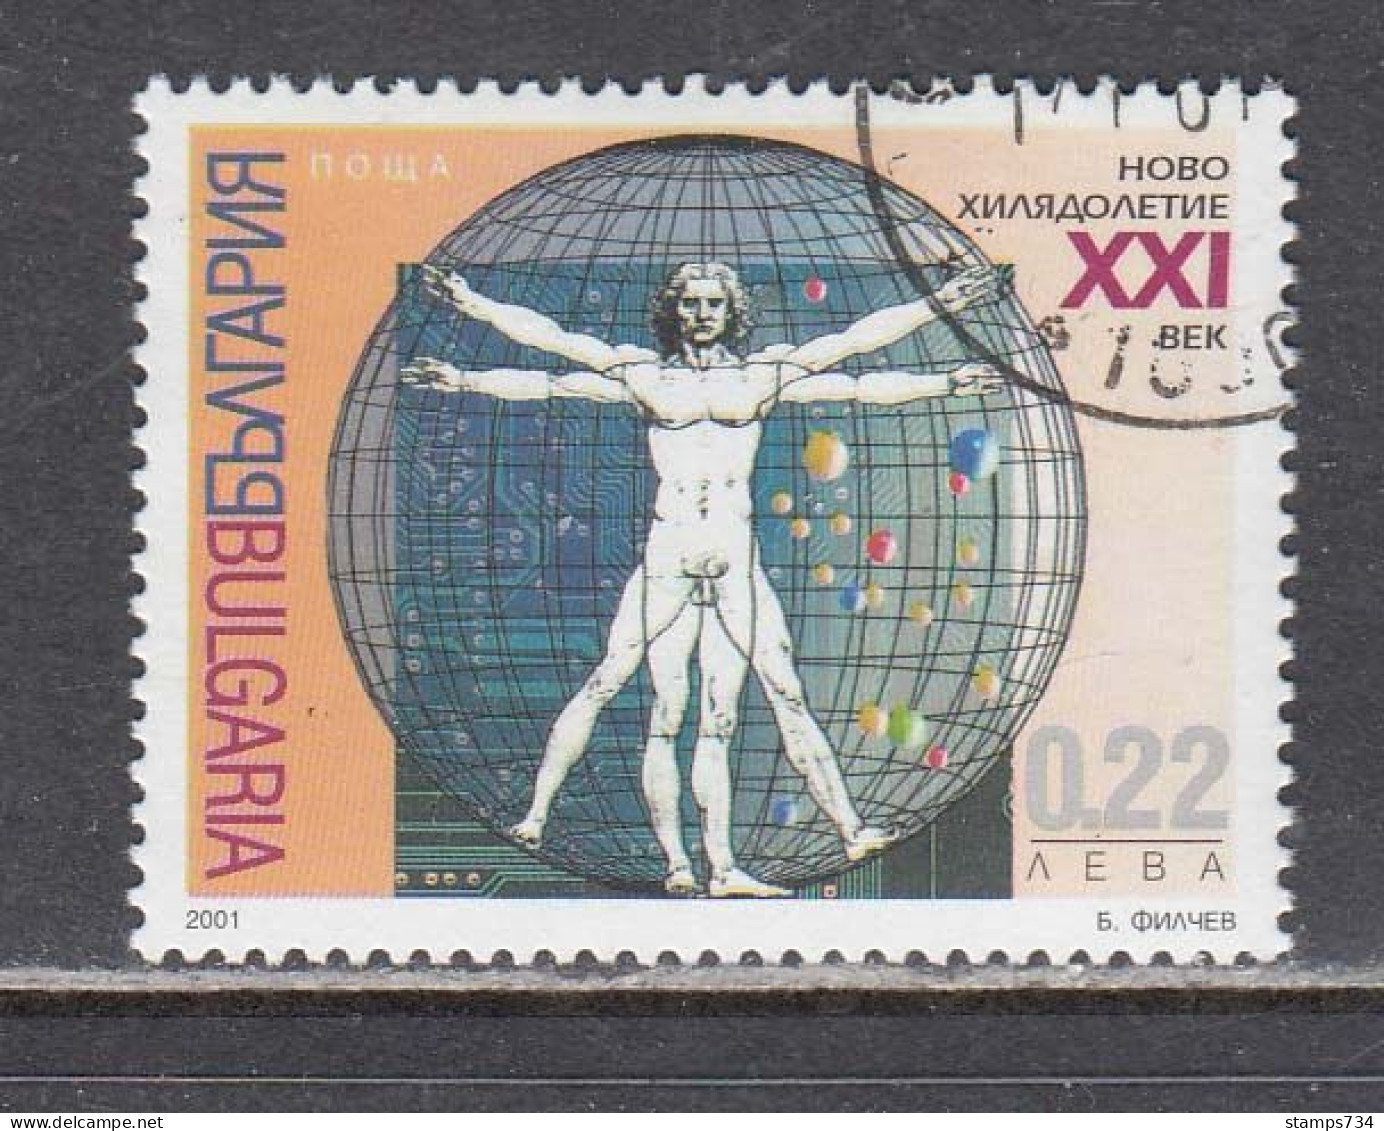 Bulgaria 2001 - The New Millennium, Mi-Nr. 4502, Used - Used Stamps